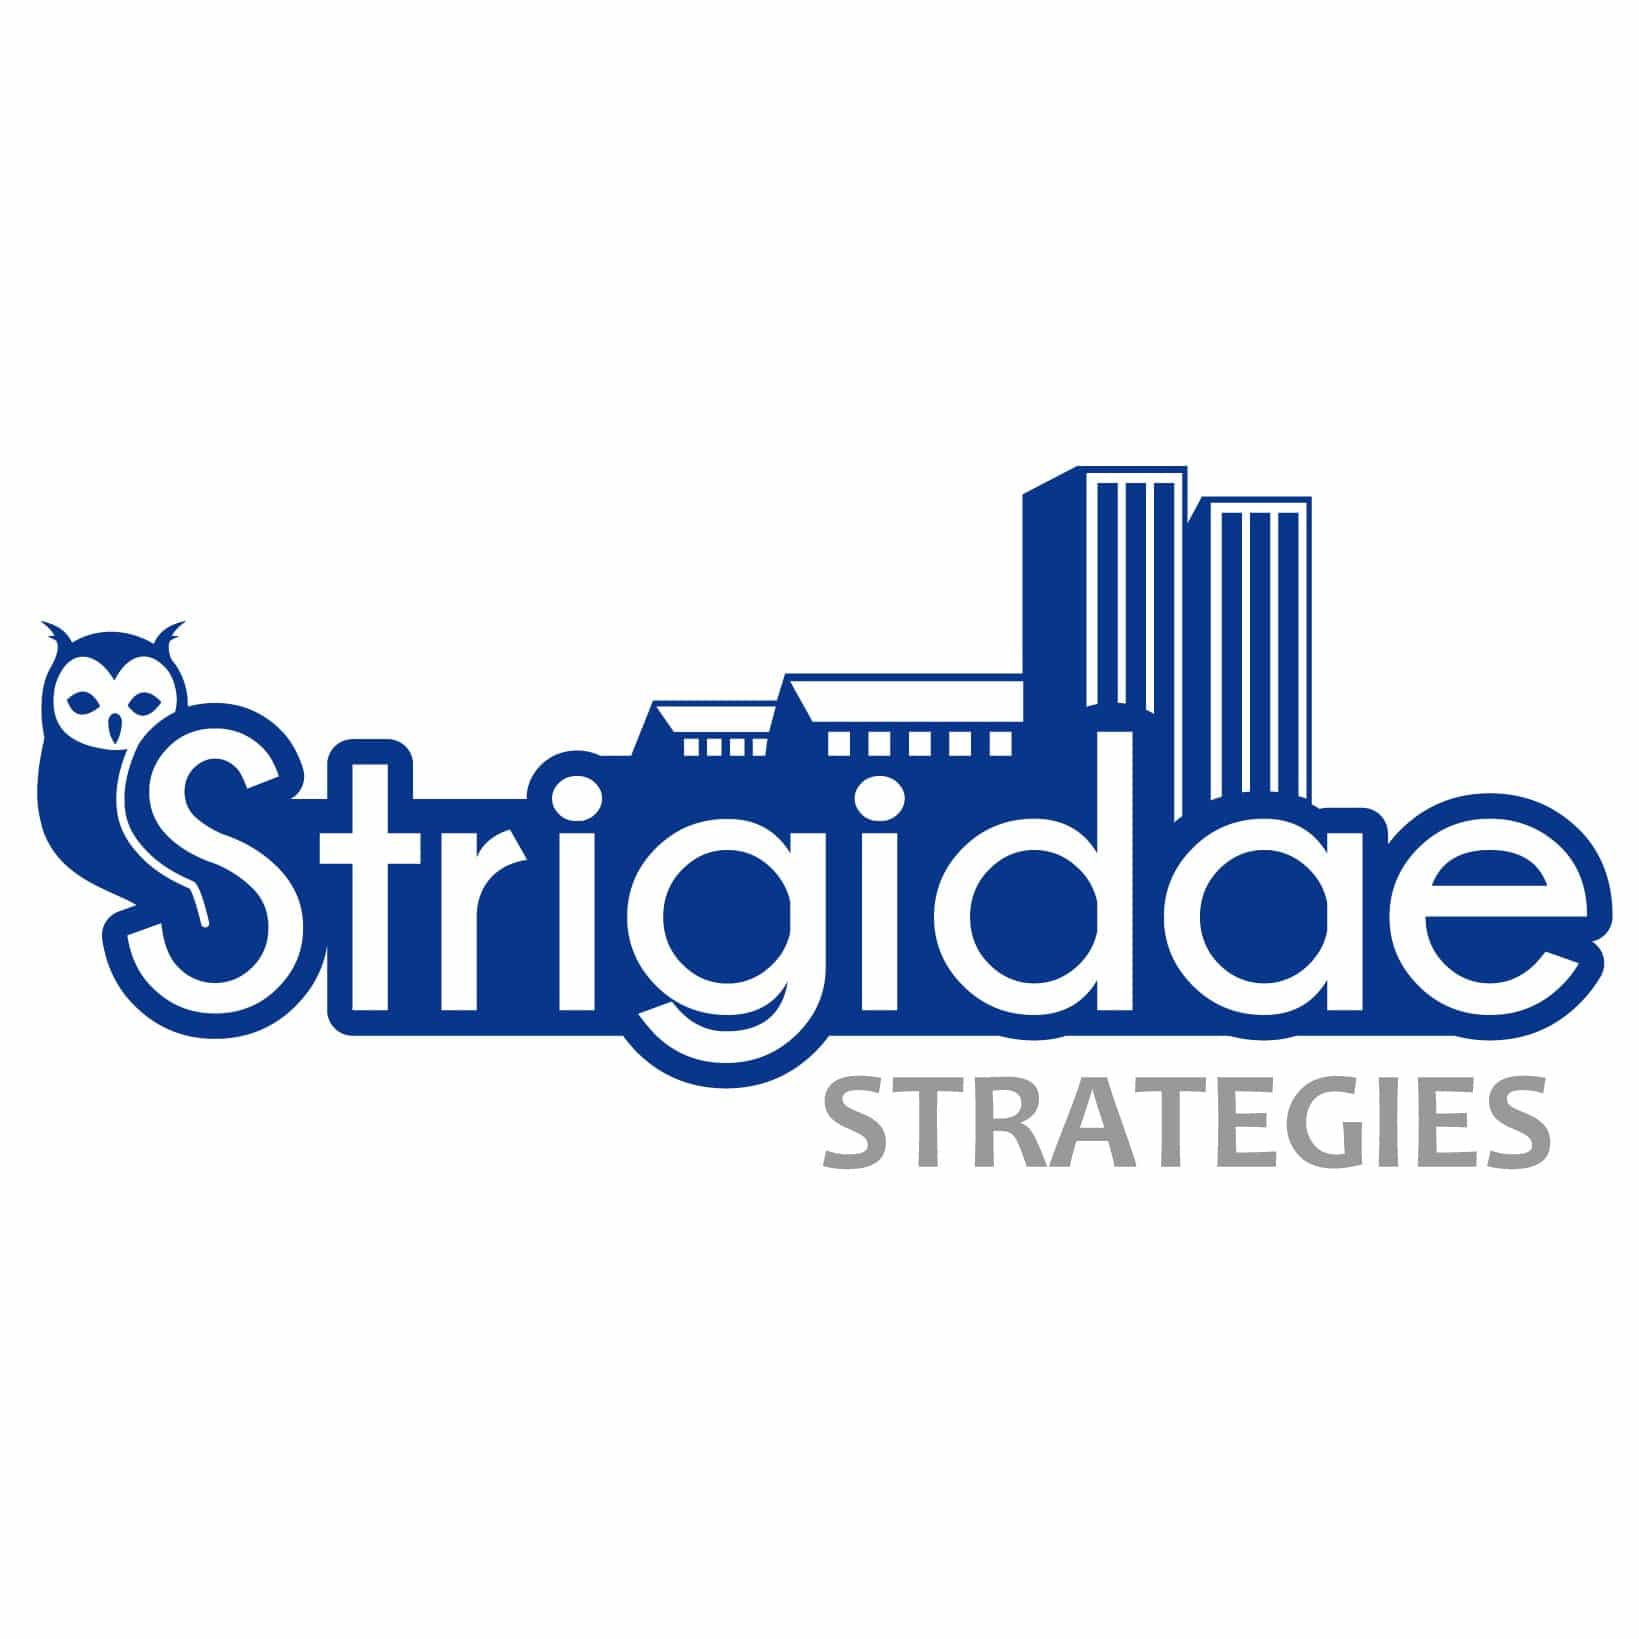 Strigidae Strategies logo